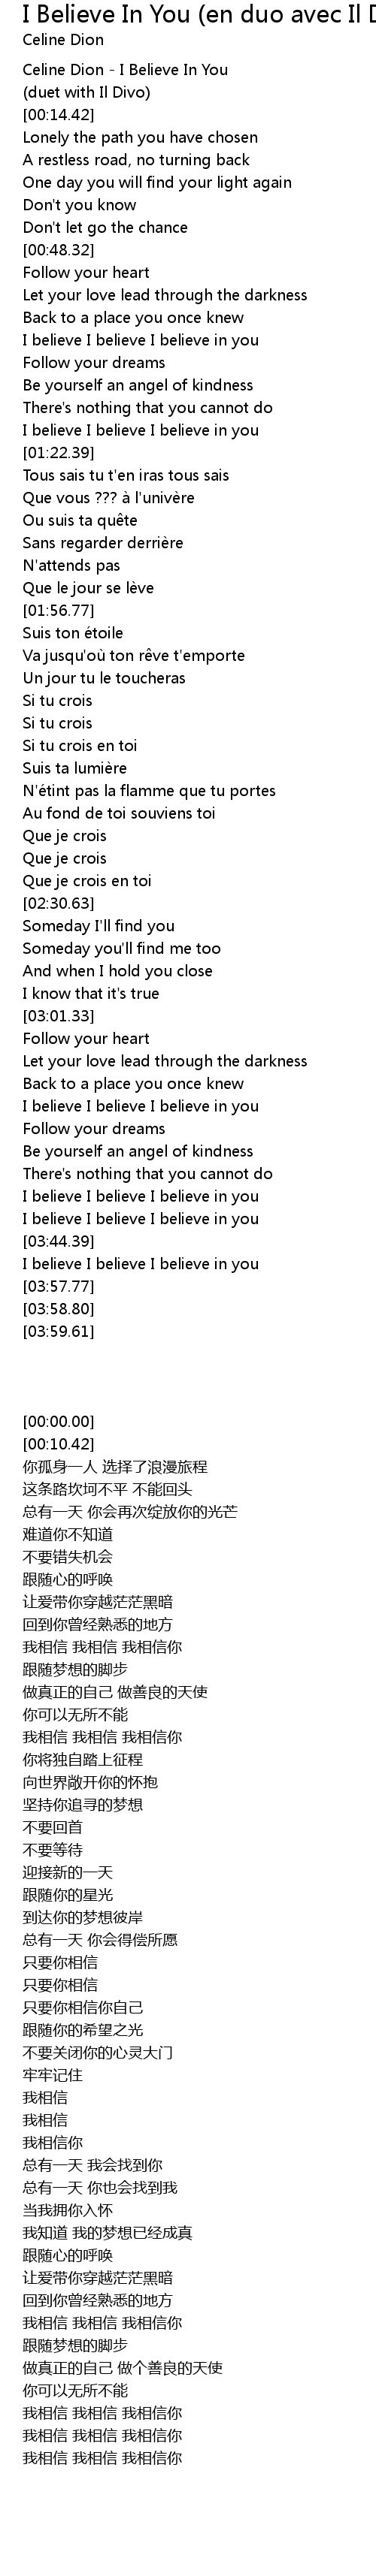 I Believe In You En Duo Avec Il Divo Bonus Track Lyrics Follow Lyrics